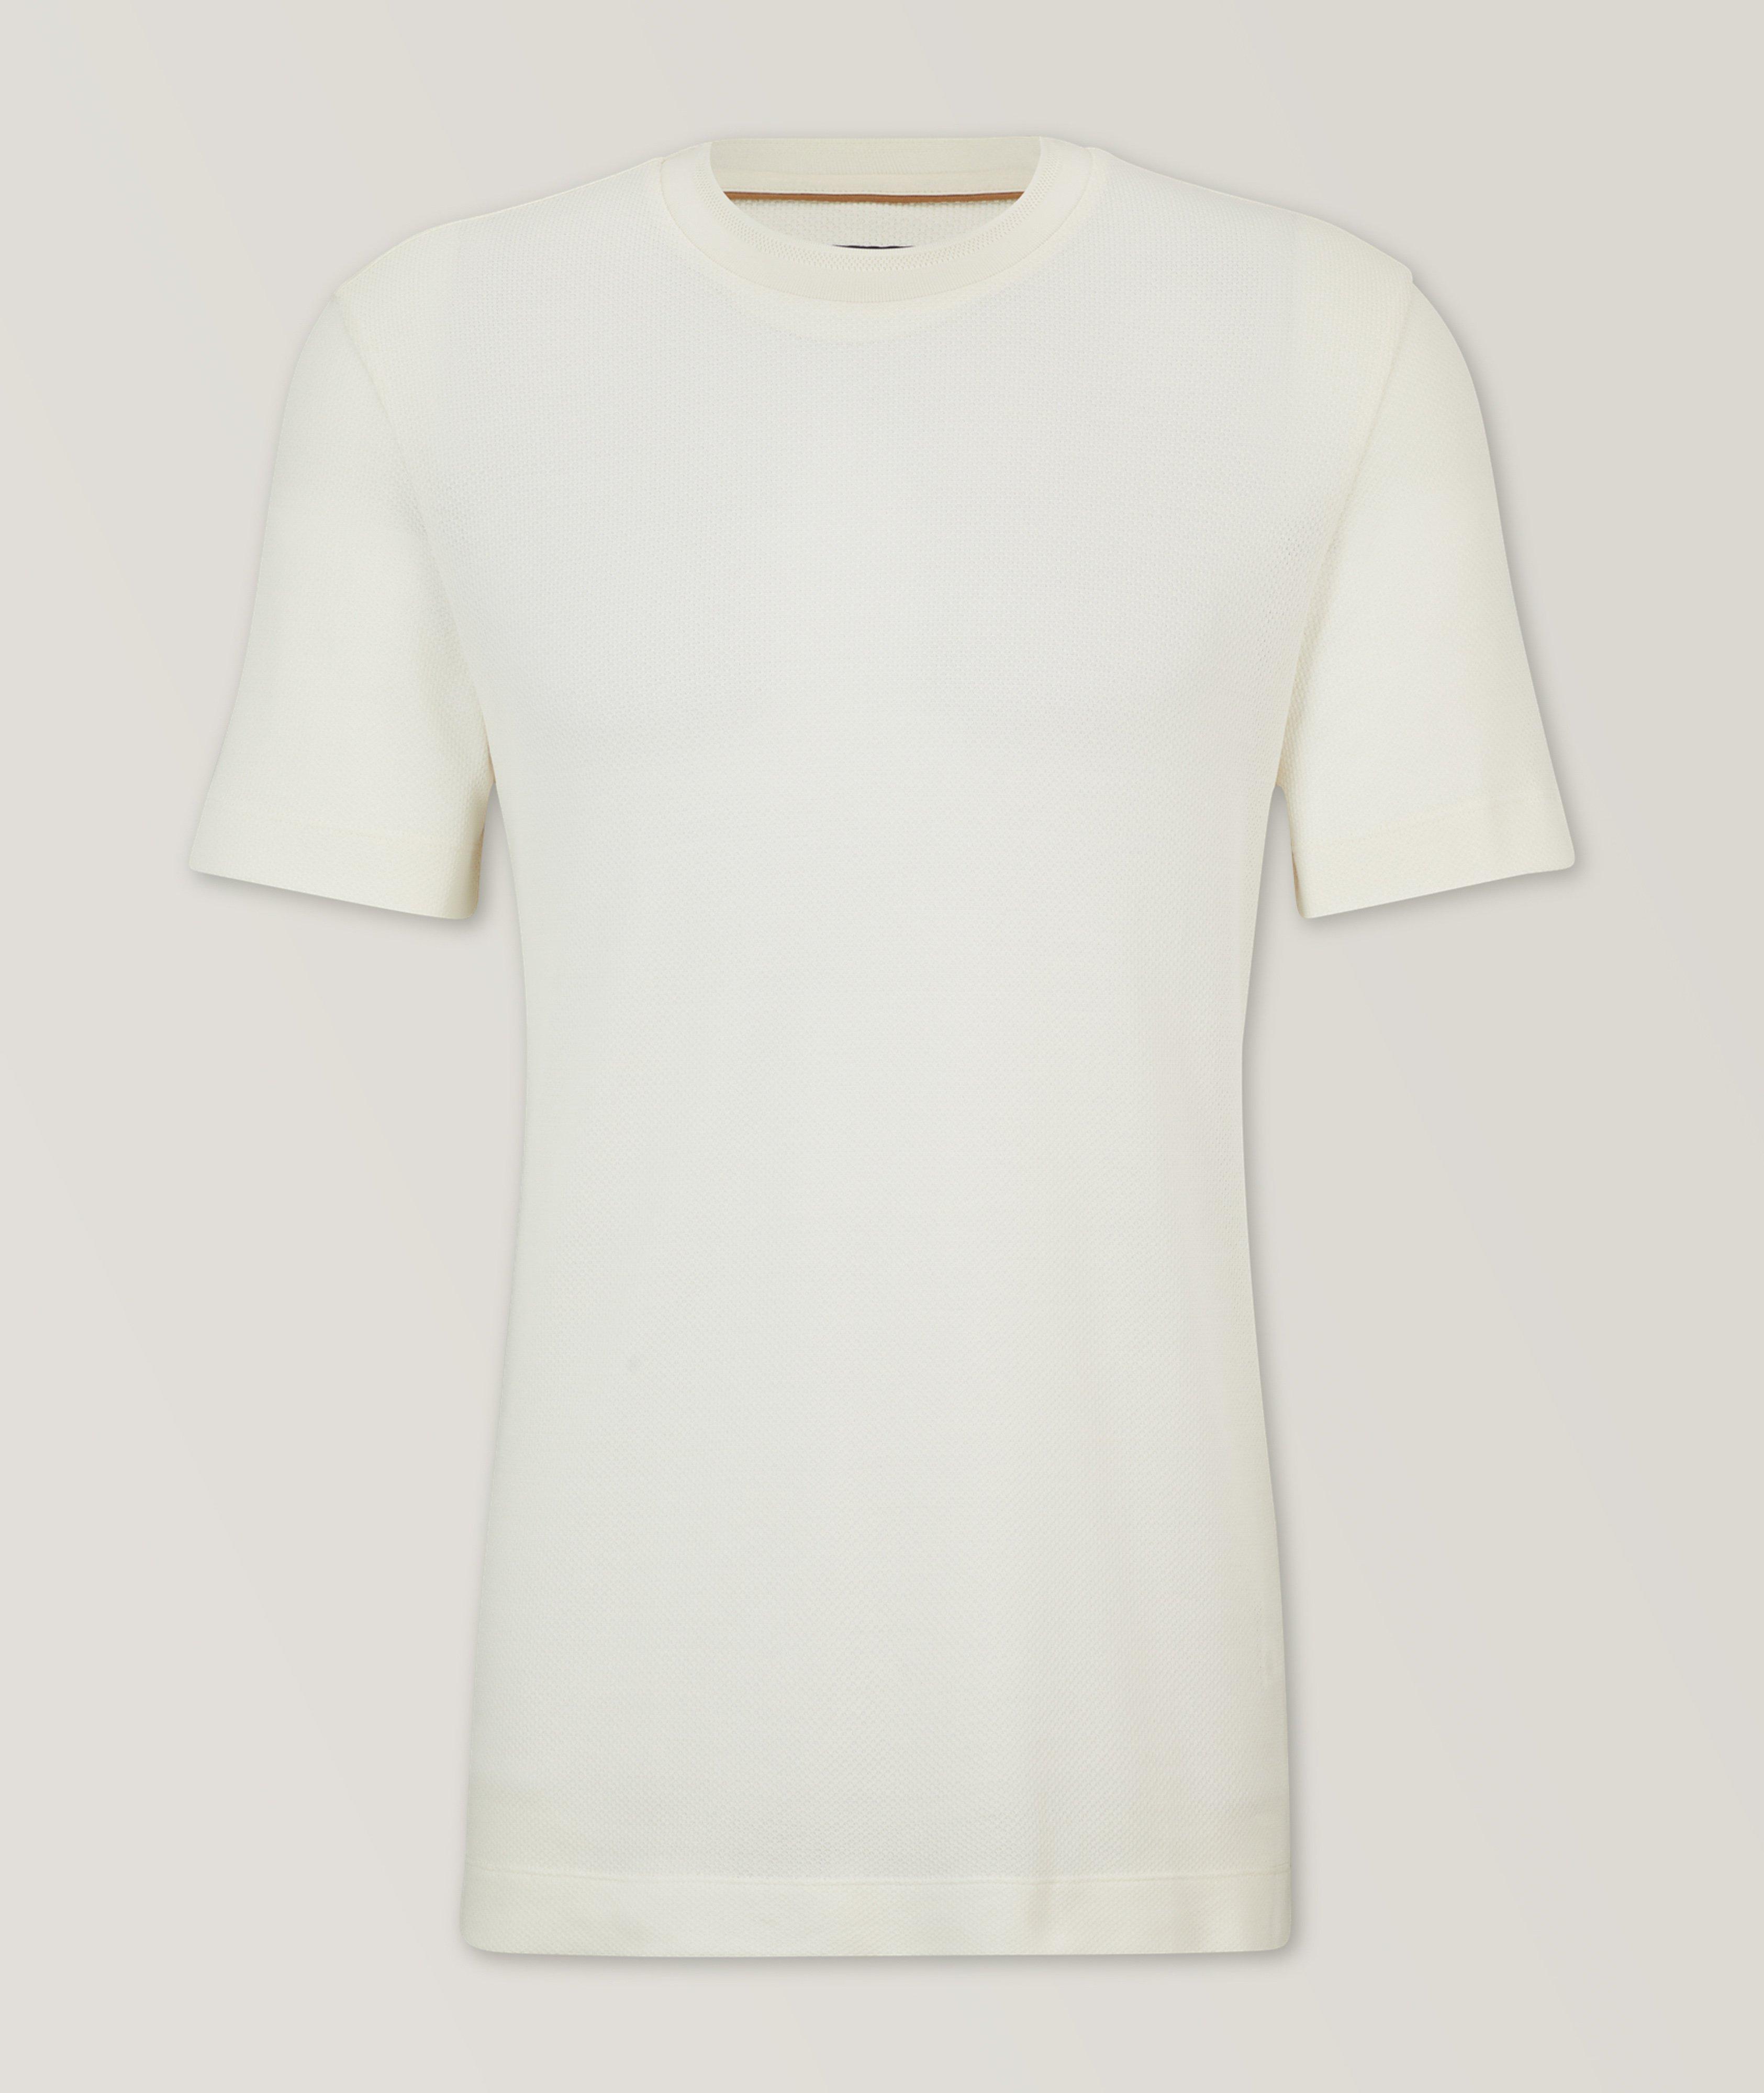 Cotton-Silk T-Shirt image 0